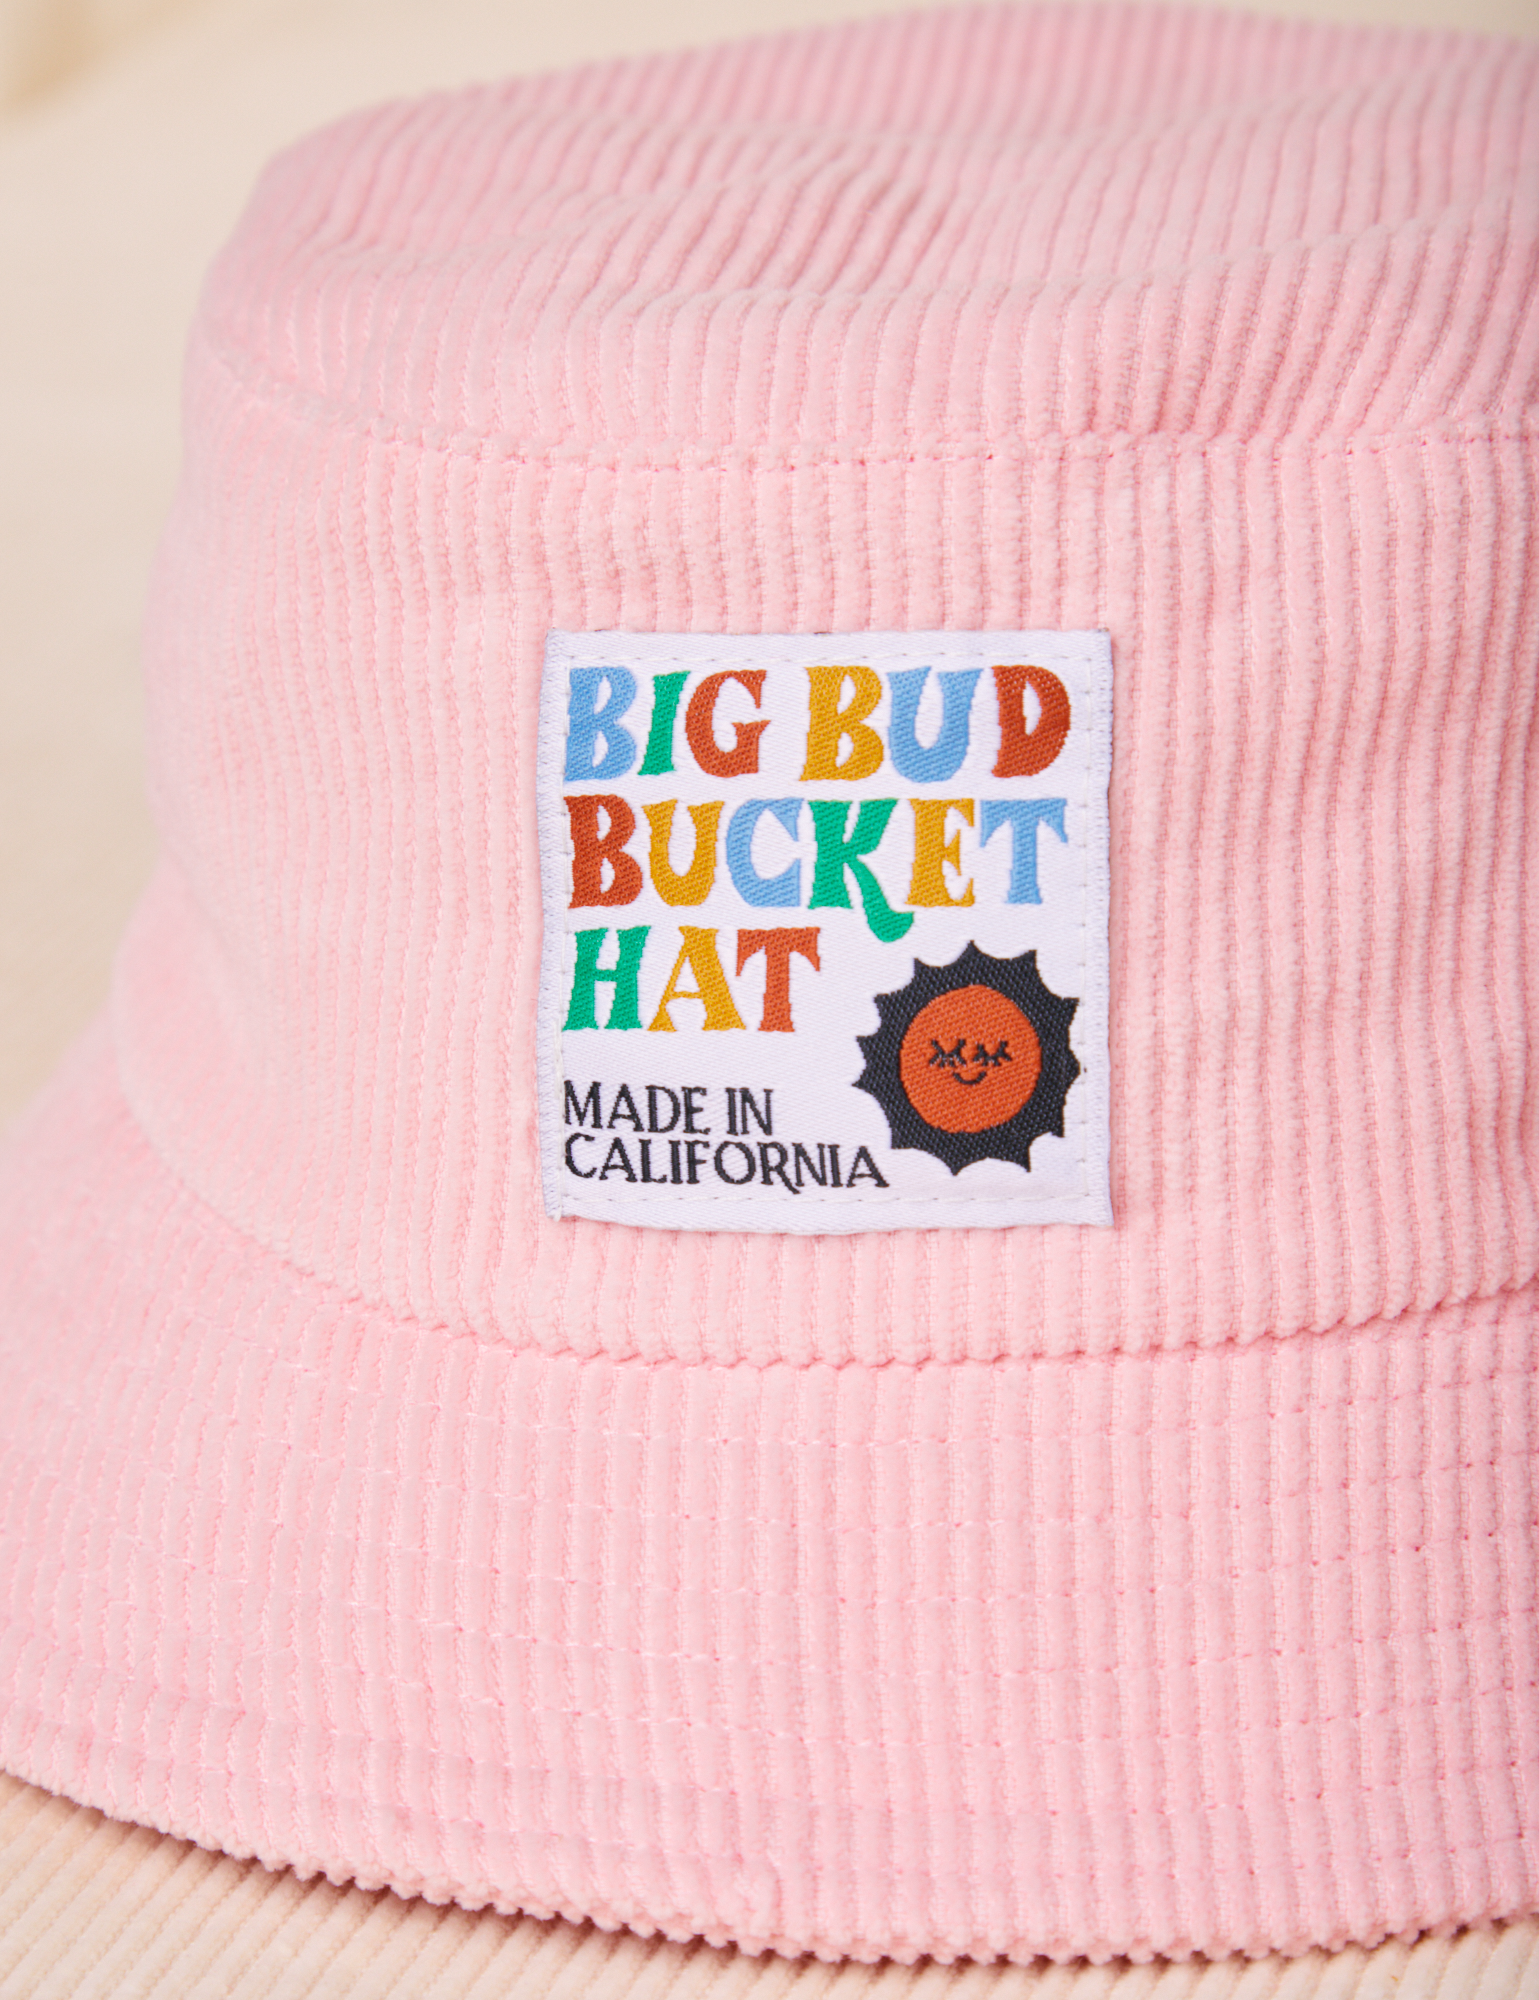 Big Bud – BIG PRESS BUD Hat Bucket